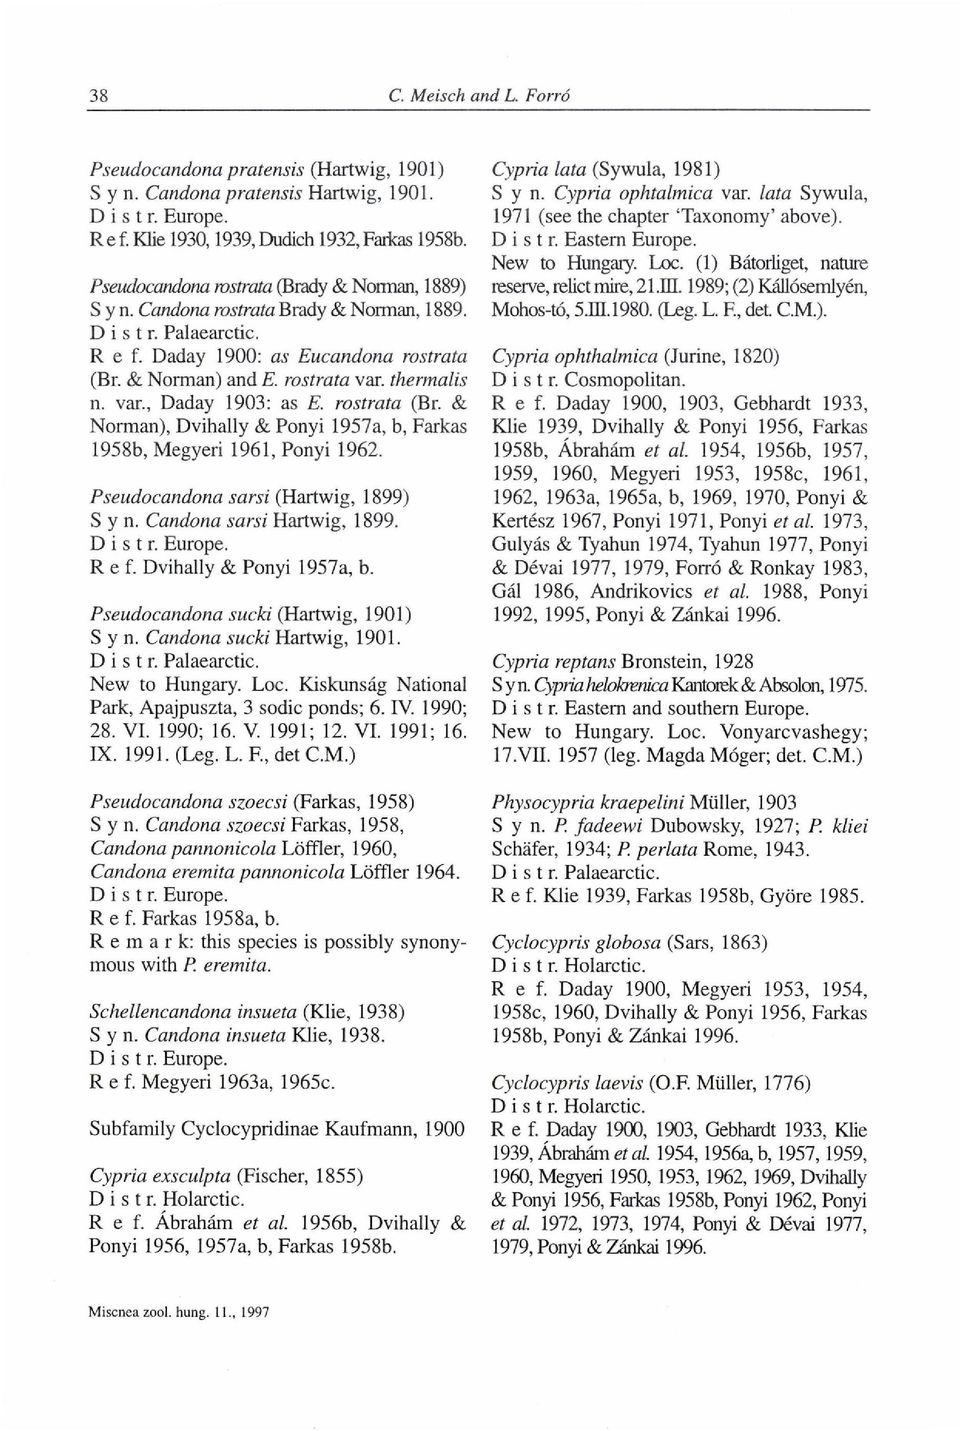 Pseudocandona sarsi (Hartwig, 1899) S y n. Candona sarsi Hartwig, 1899. Ref. Dvihally & Ponyi 1957a, b. Pseudocandona sucki (Hartwig, 1901) S y n. Candona sucki Hartwig, 1901. New to Hungary. Loc.